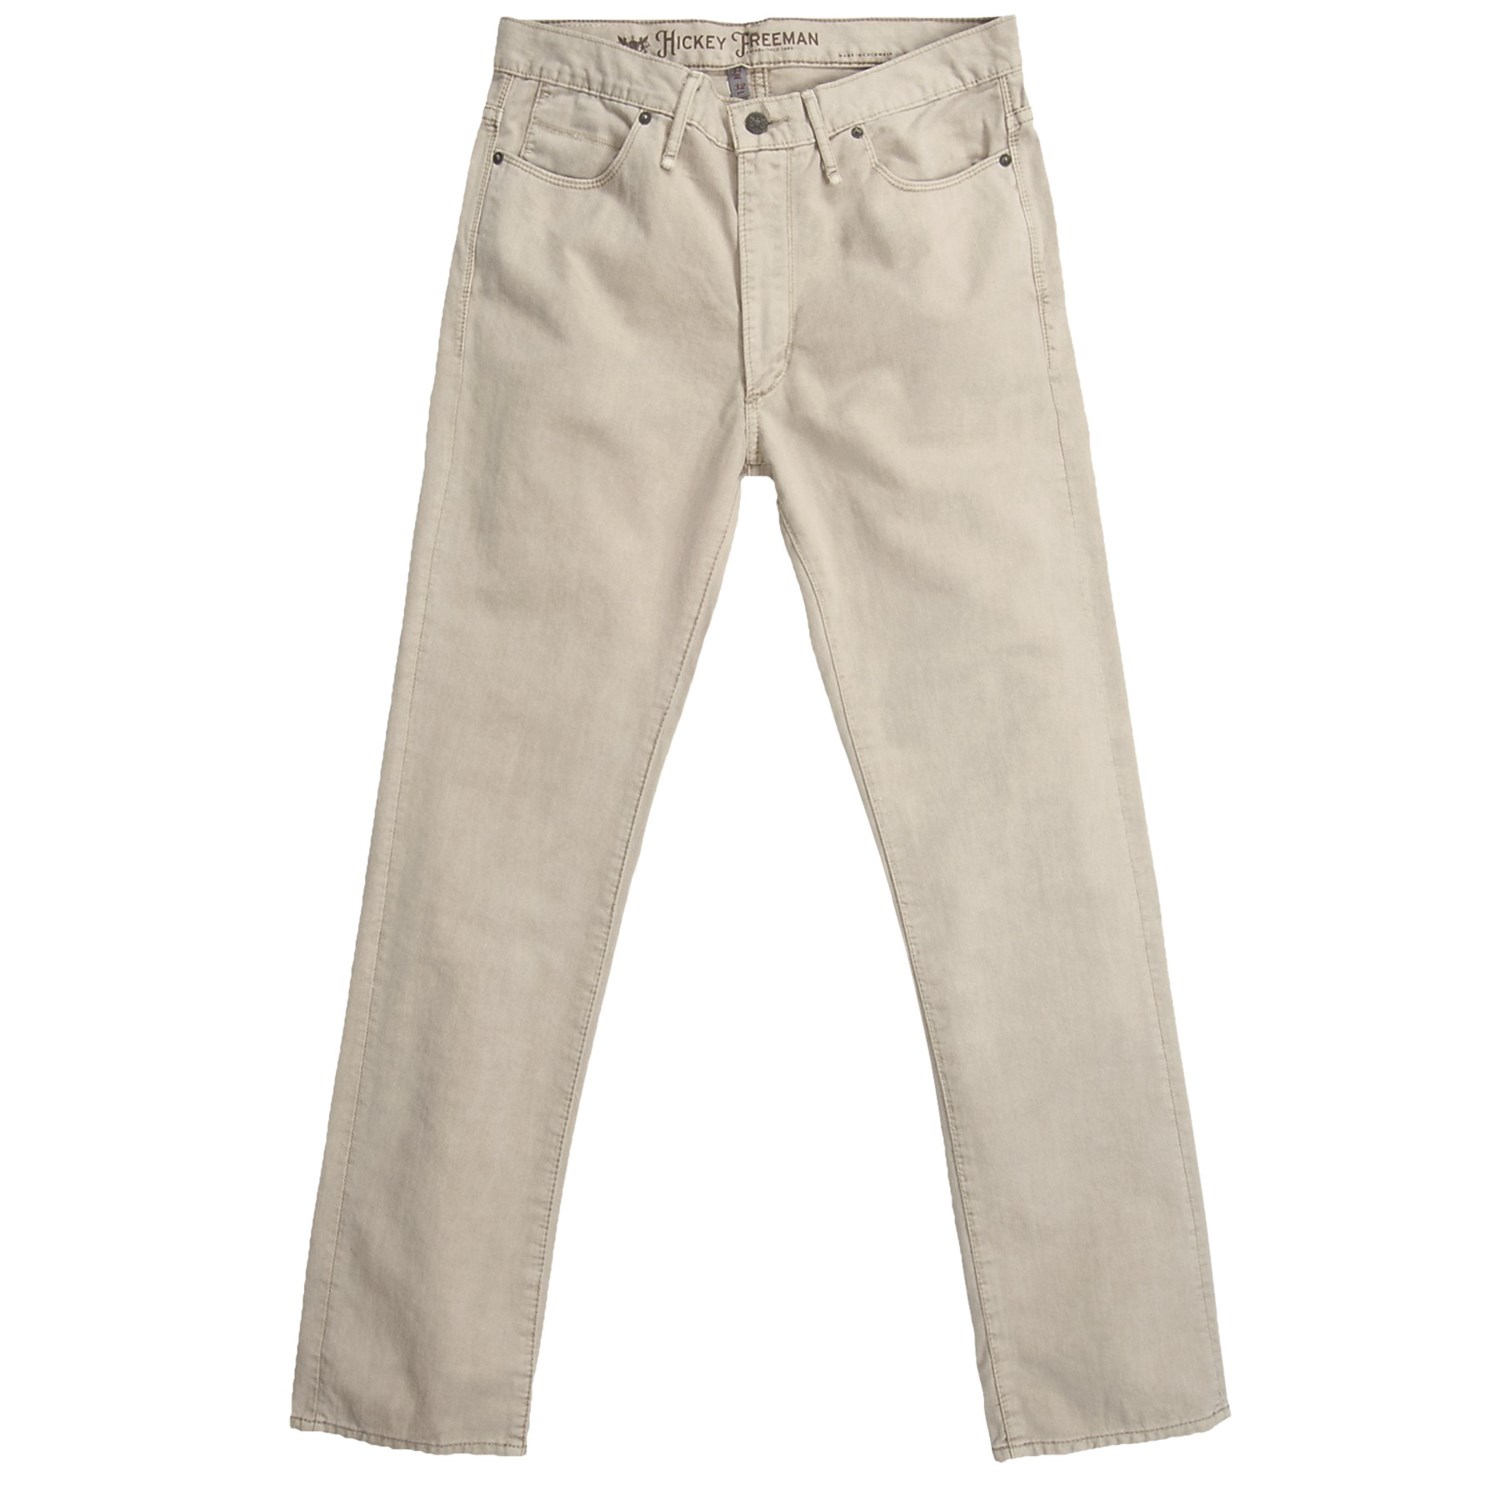 Hickey Freeman Denim Pants (For Men) 4056J - Save 48%